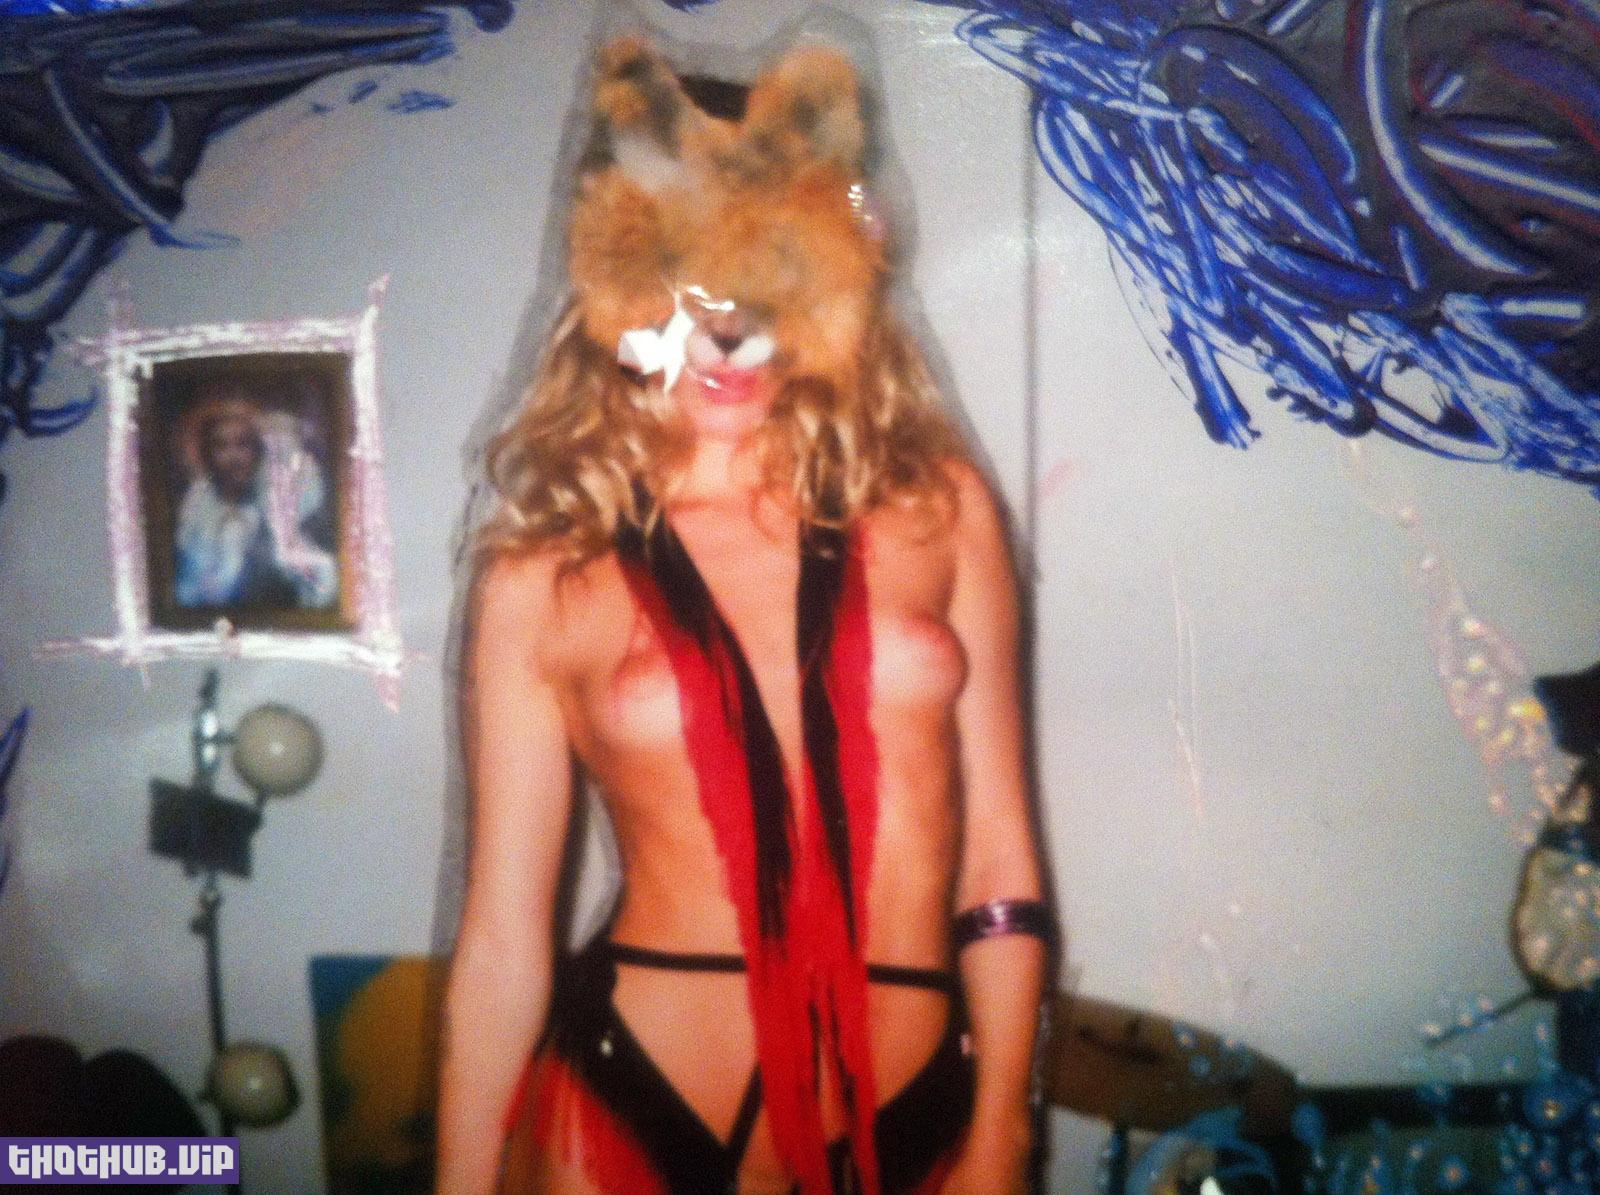 Suki Waterhouse nude photos leaked The Fappening